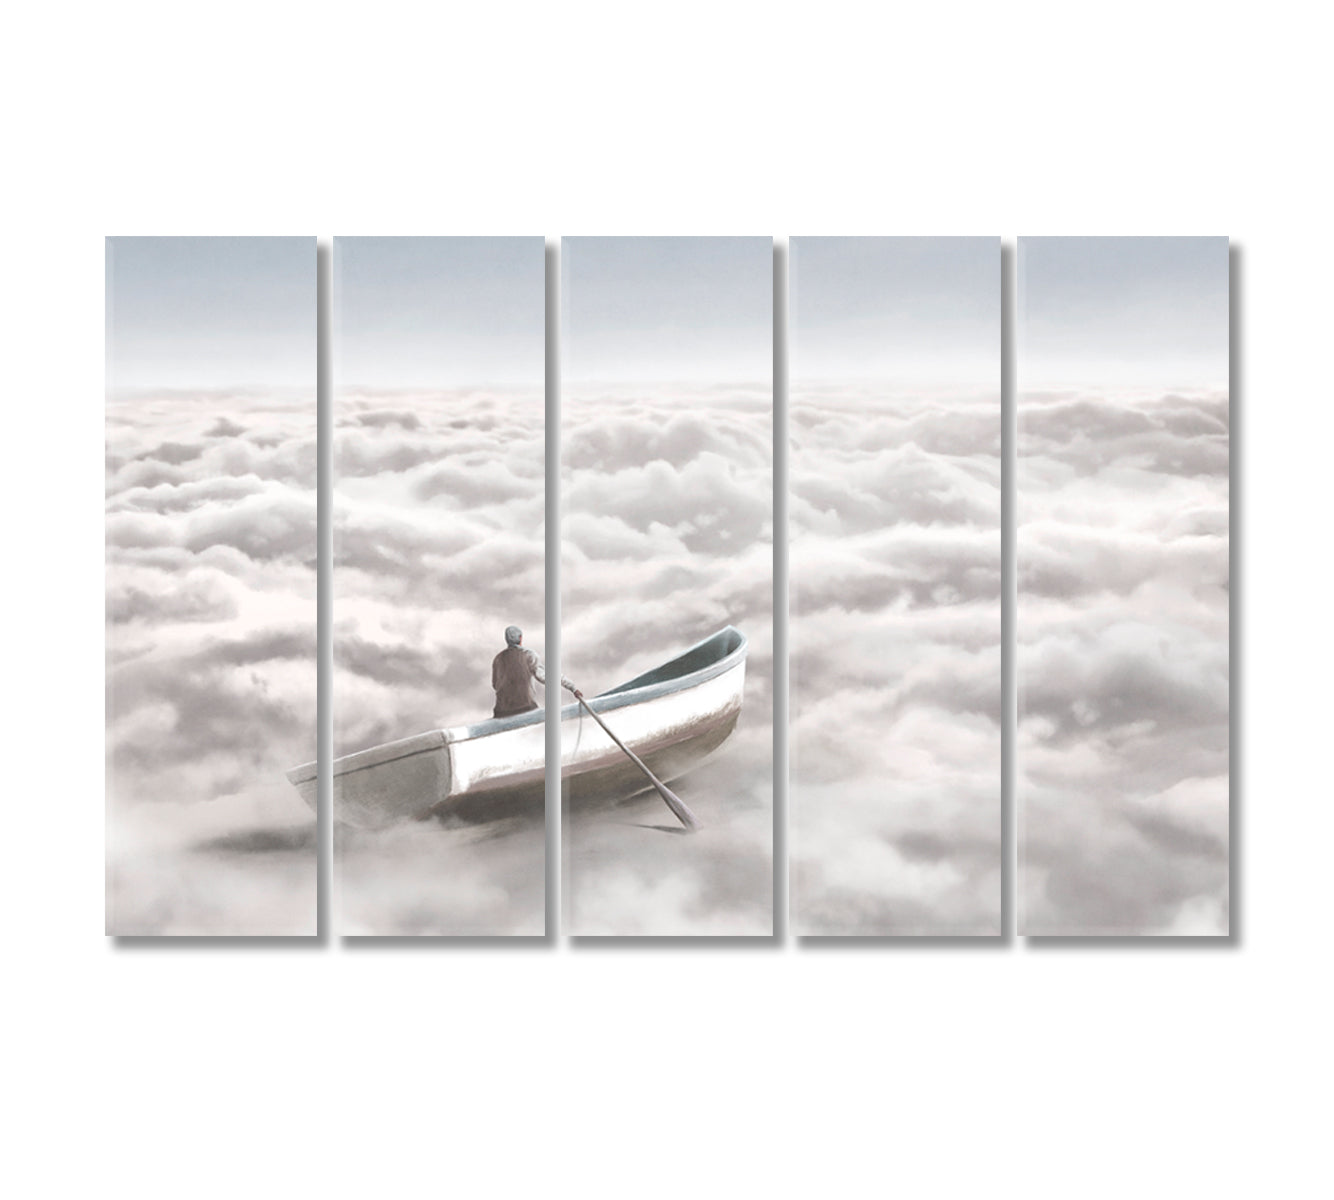 Boat in Clouds Sea Art Print-Canvas Print-CetArt-5 Panels-36x24 inches-CetArt